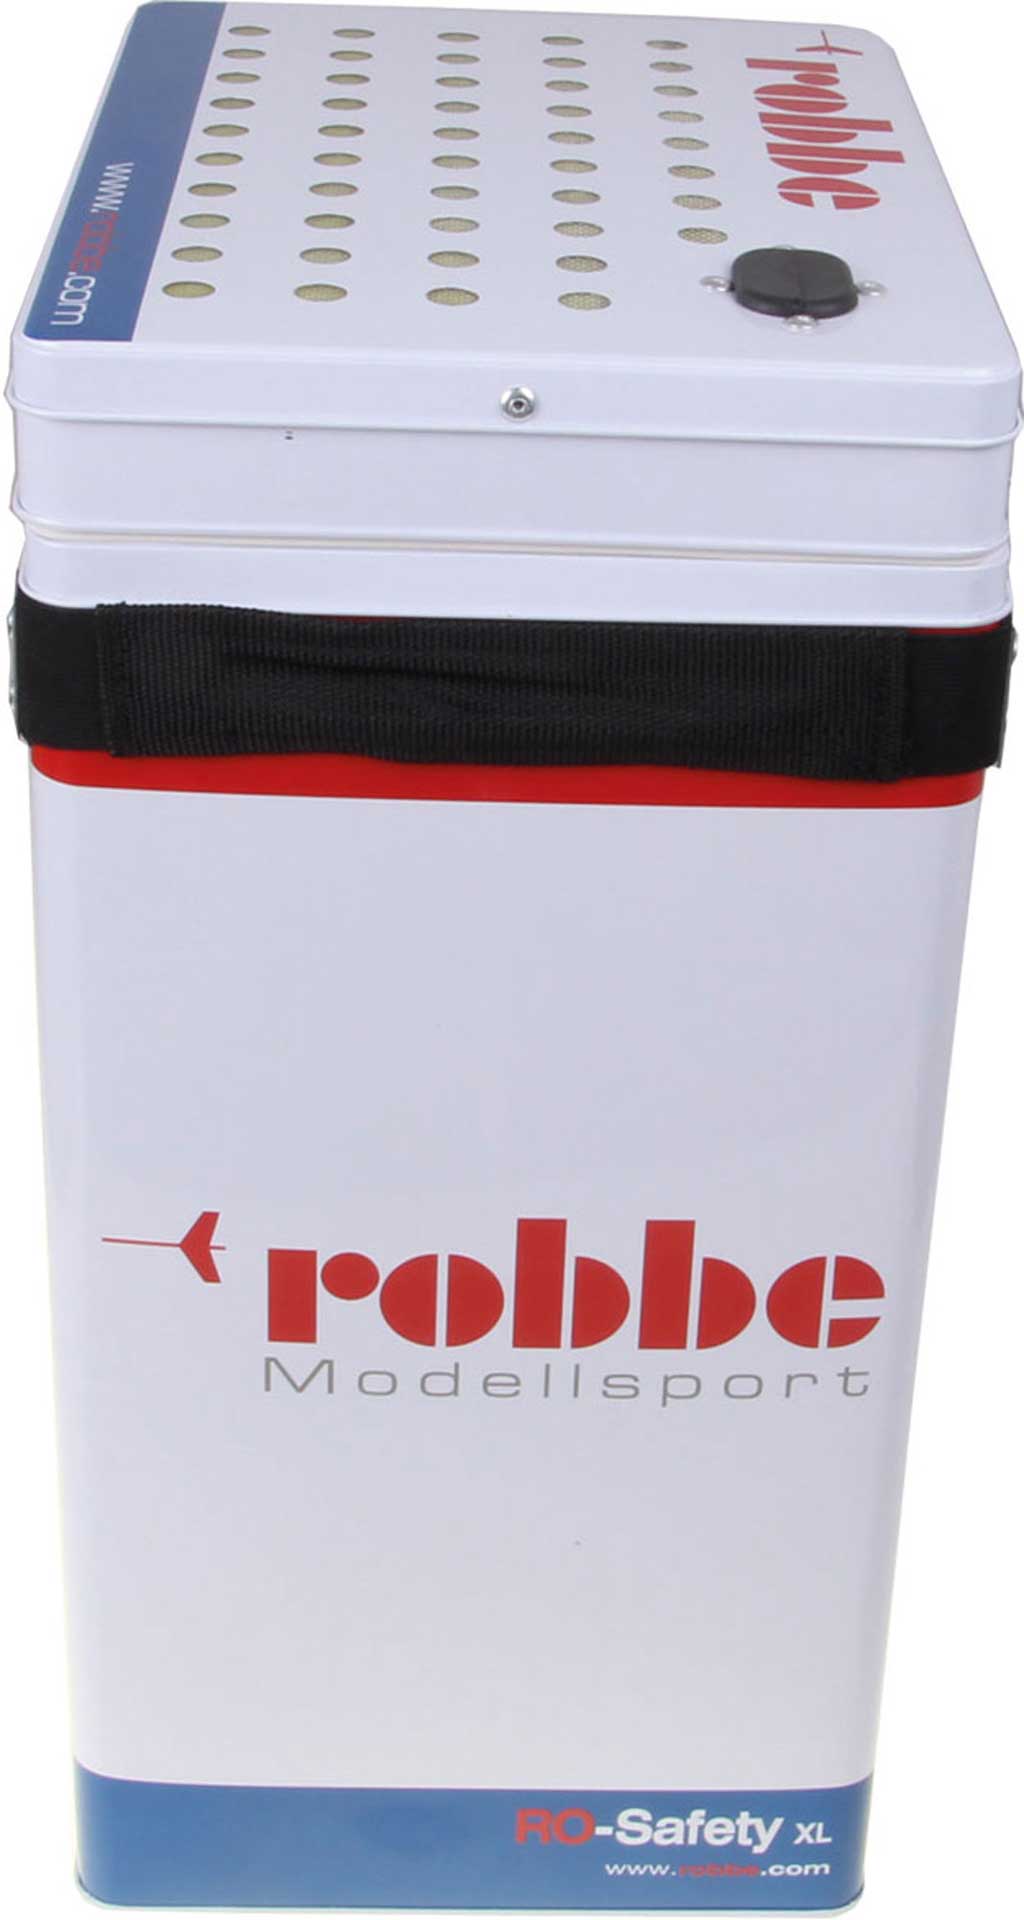 Robbe Modellsport RO-SAFETY XL LIPO TRESOR